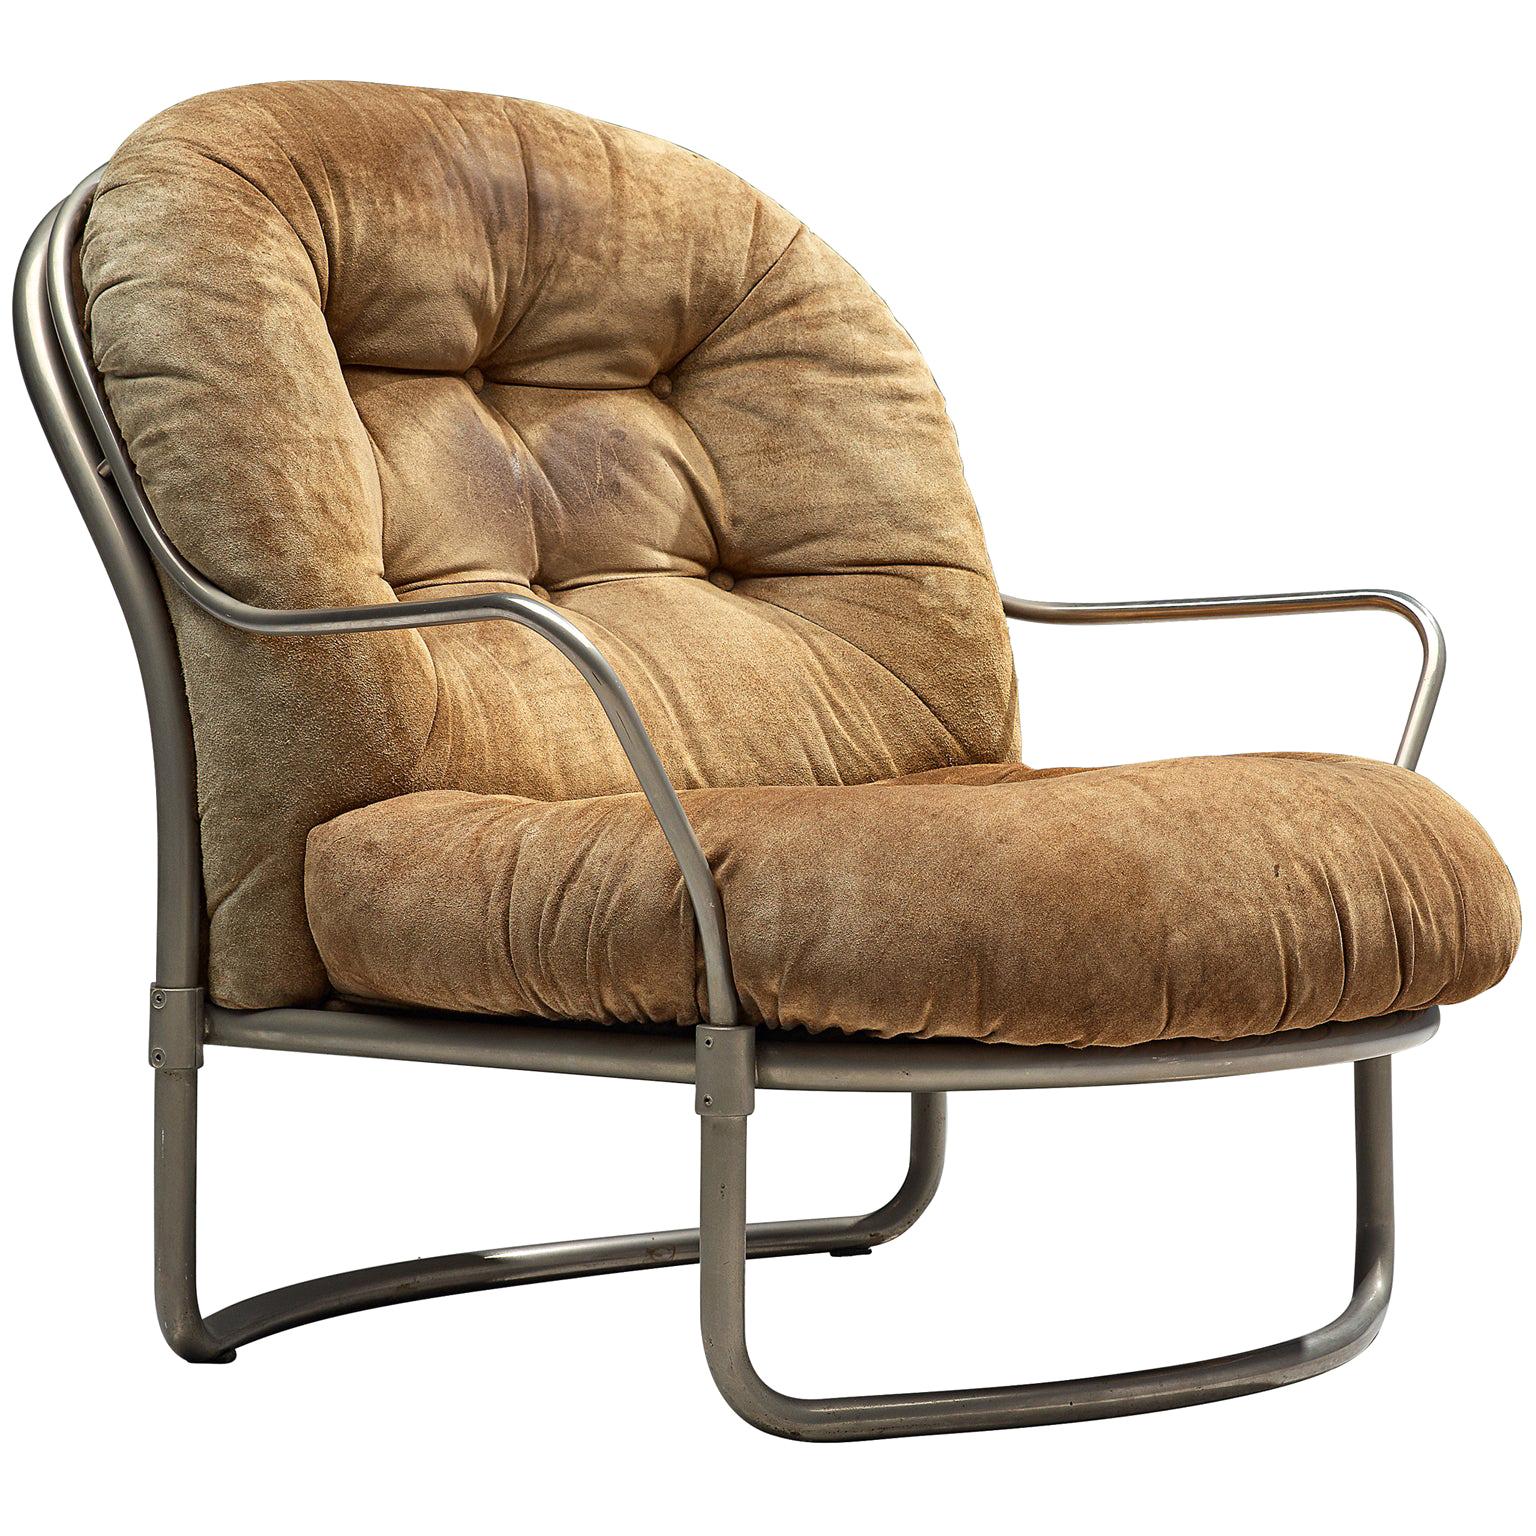 Carlo de Carli Tubular Lounge Chair with Cognac Suede Seat